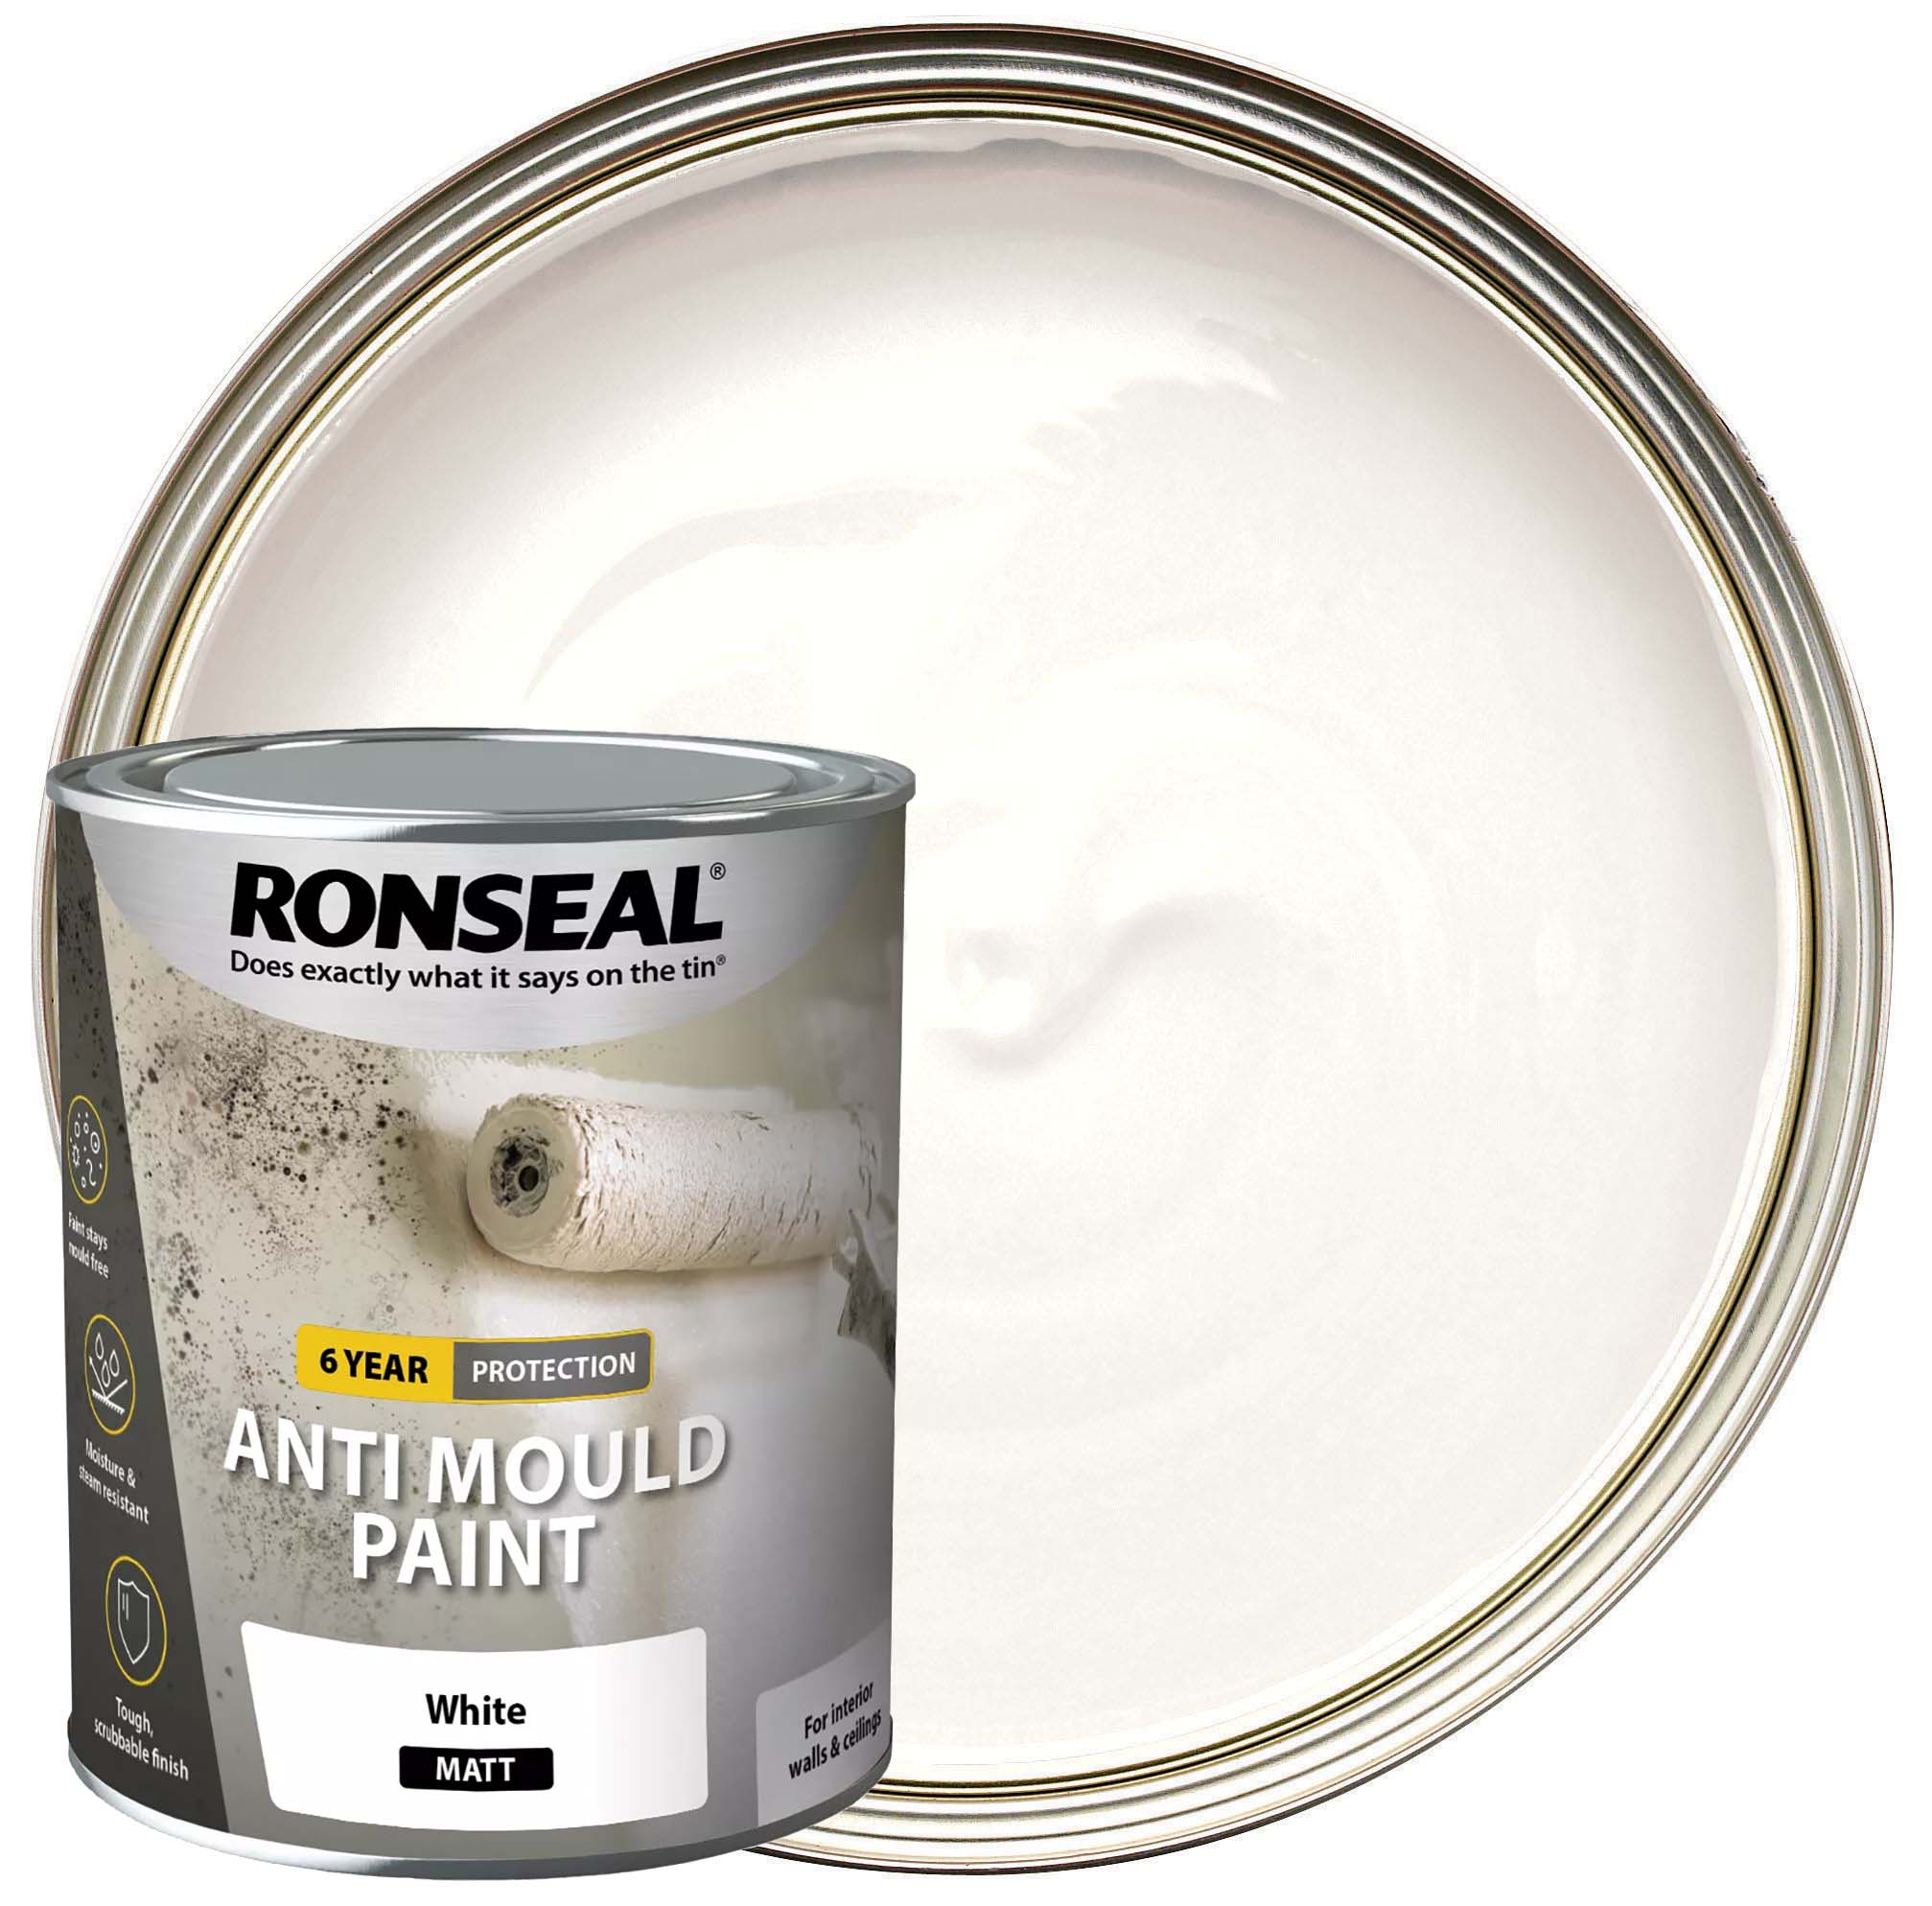 Ronseal 6 Year Matt White Anti-Mould Paint - 750ml